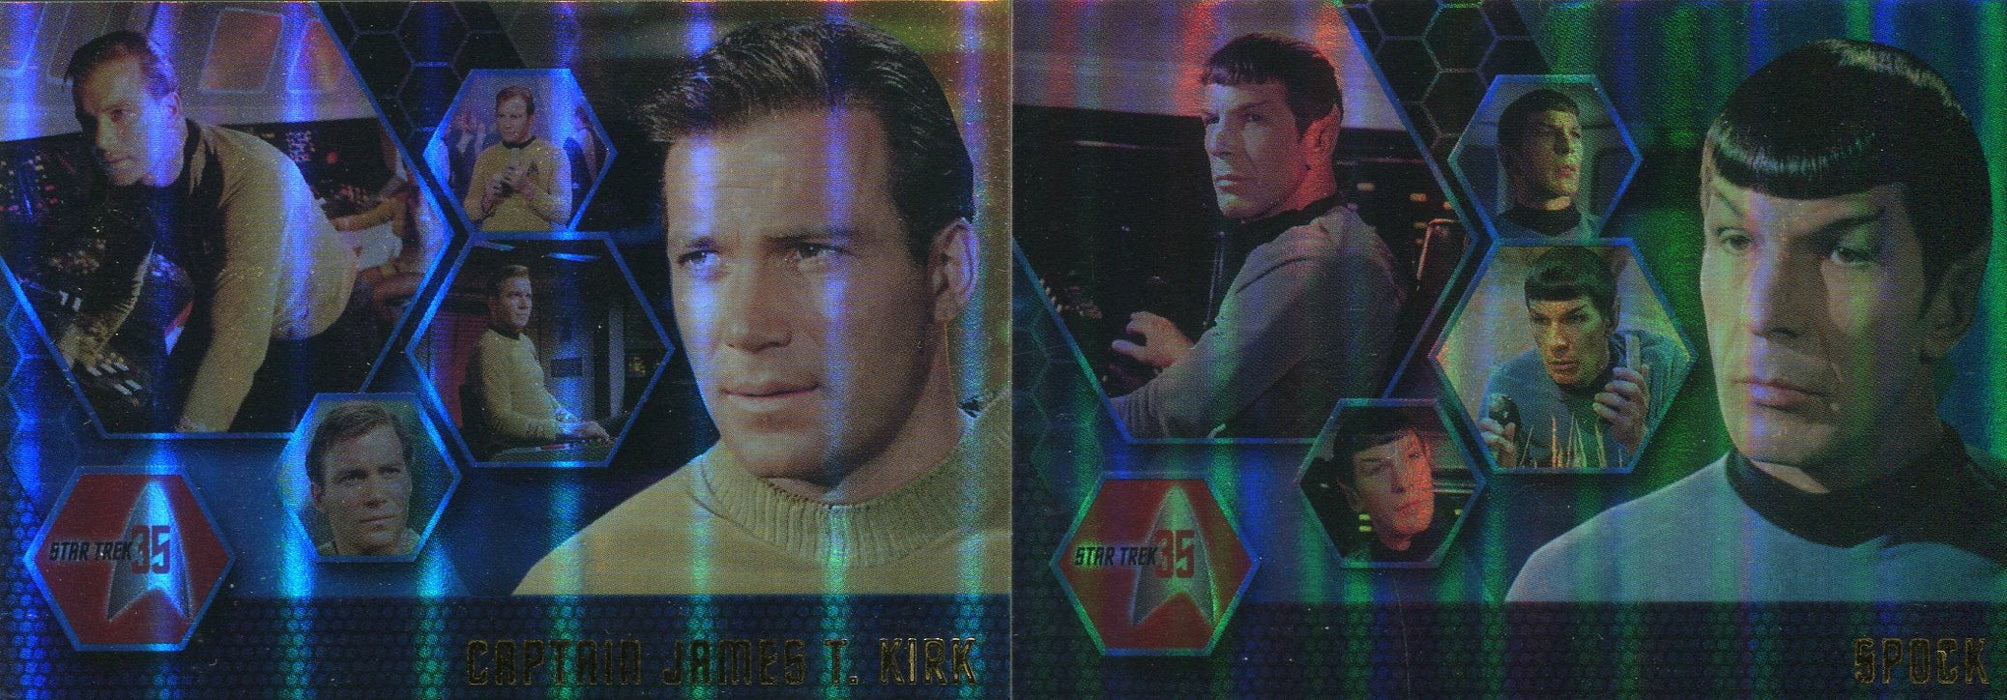 Star Trek 35th Anniversary HoloFEX Promo 2 Card Set P1 P2 Rittenhouse 2001   - TvMovieCards.com